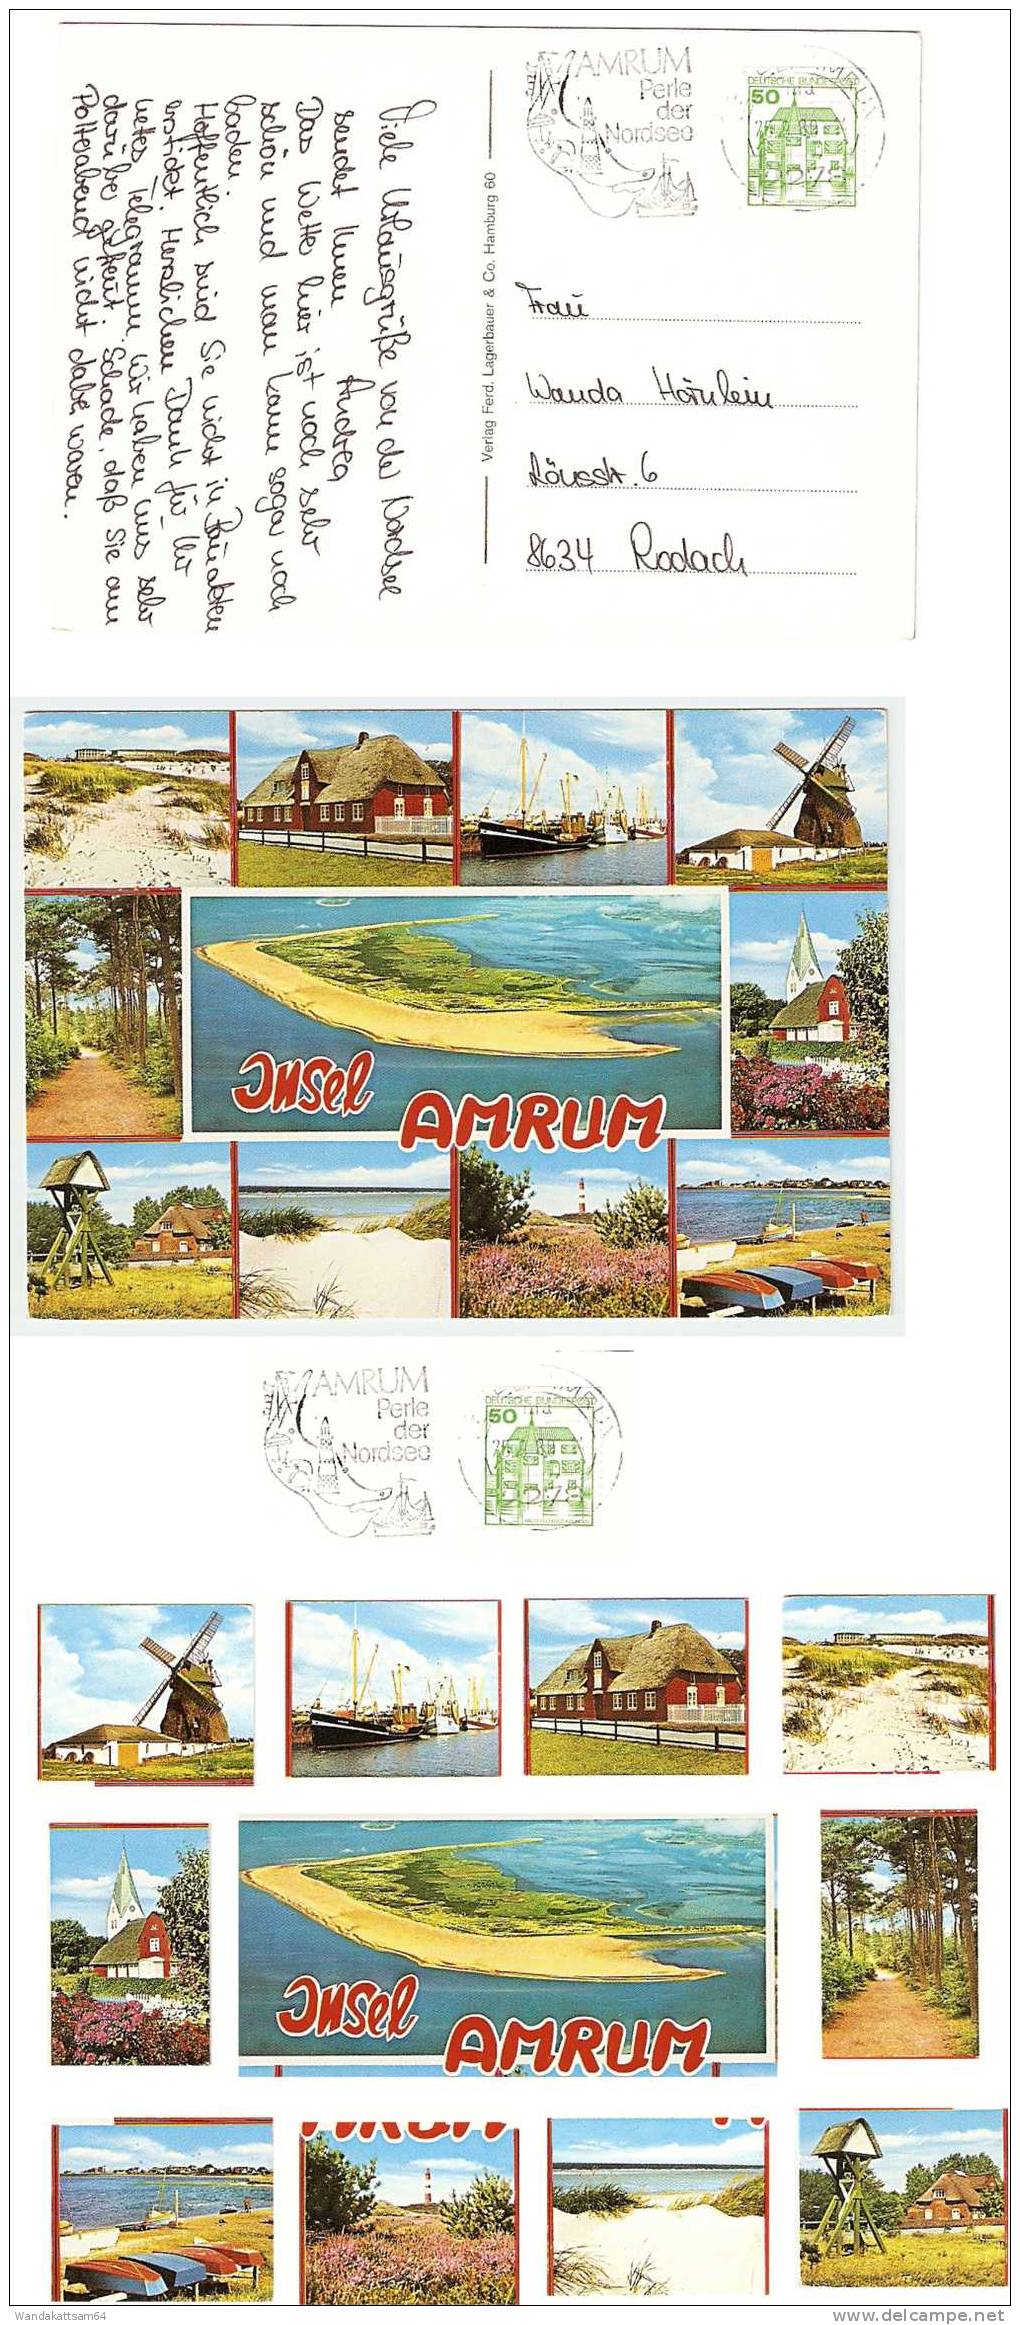 AK INSEL AMRUM Mehrbildkarte 11 Bilder Mühle Friesenhaus Dünenleuchtturm Kirche25.9.80-14 2278 NEBEL AMRUM Werbestempel - Nordfriesland